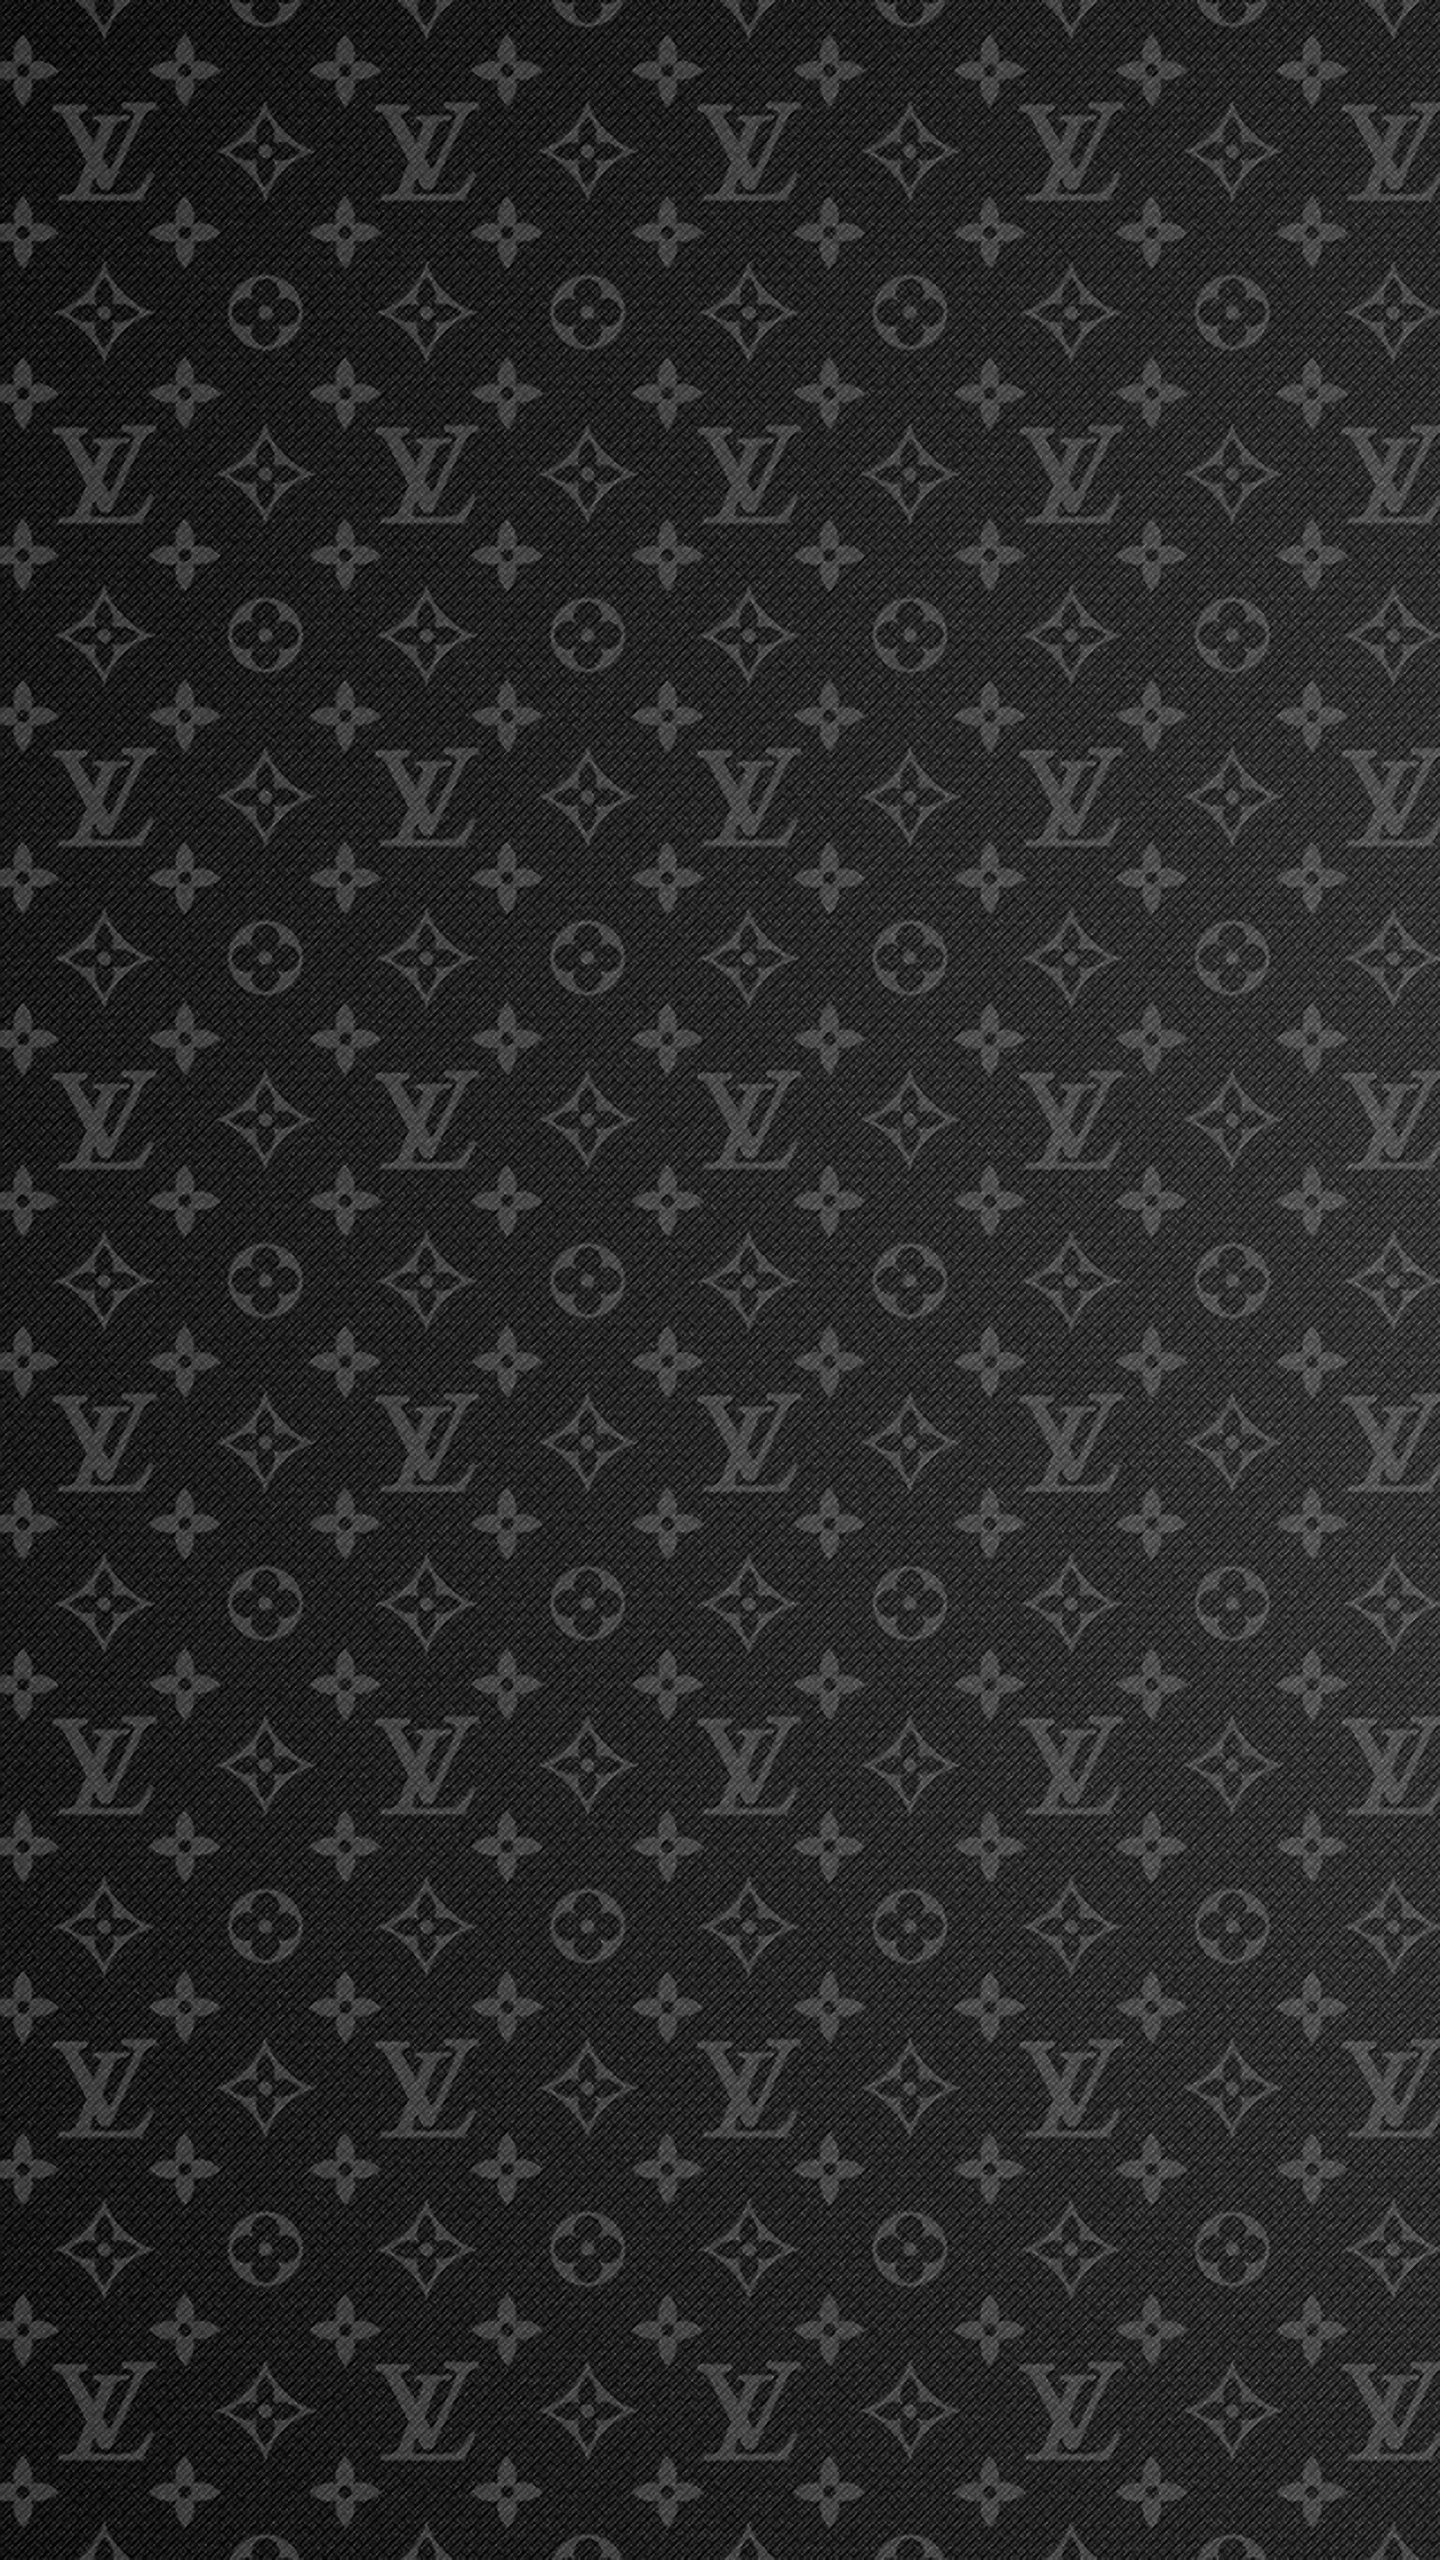 Hình nền Louis Vuitton cổ điển 2K cho điện thoại